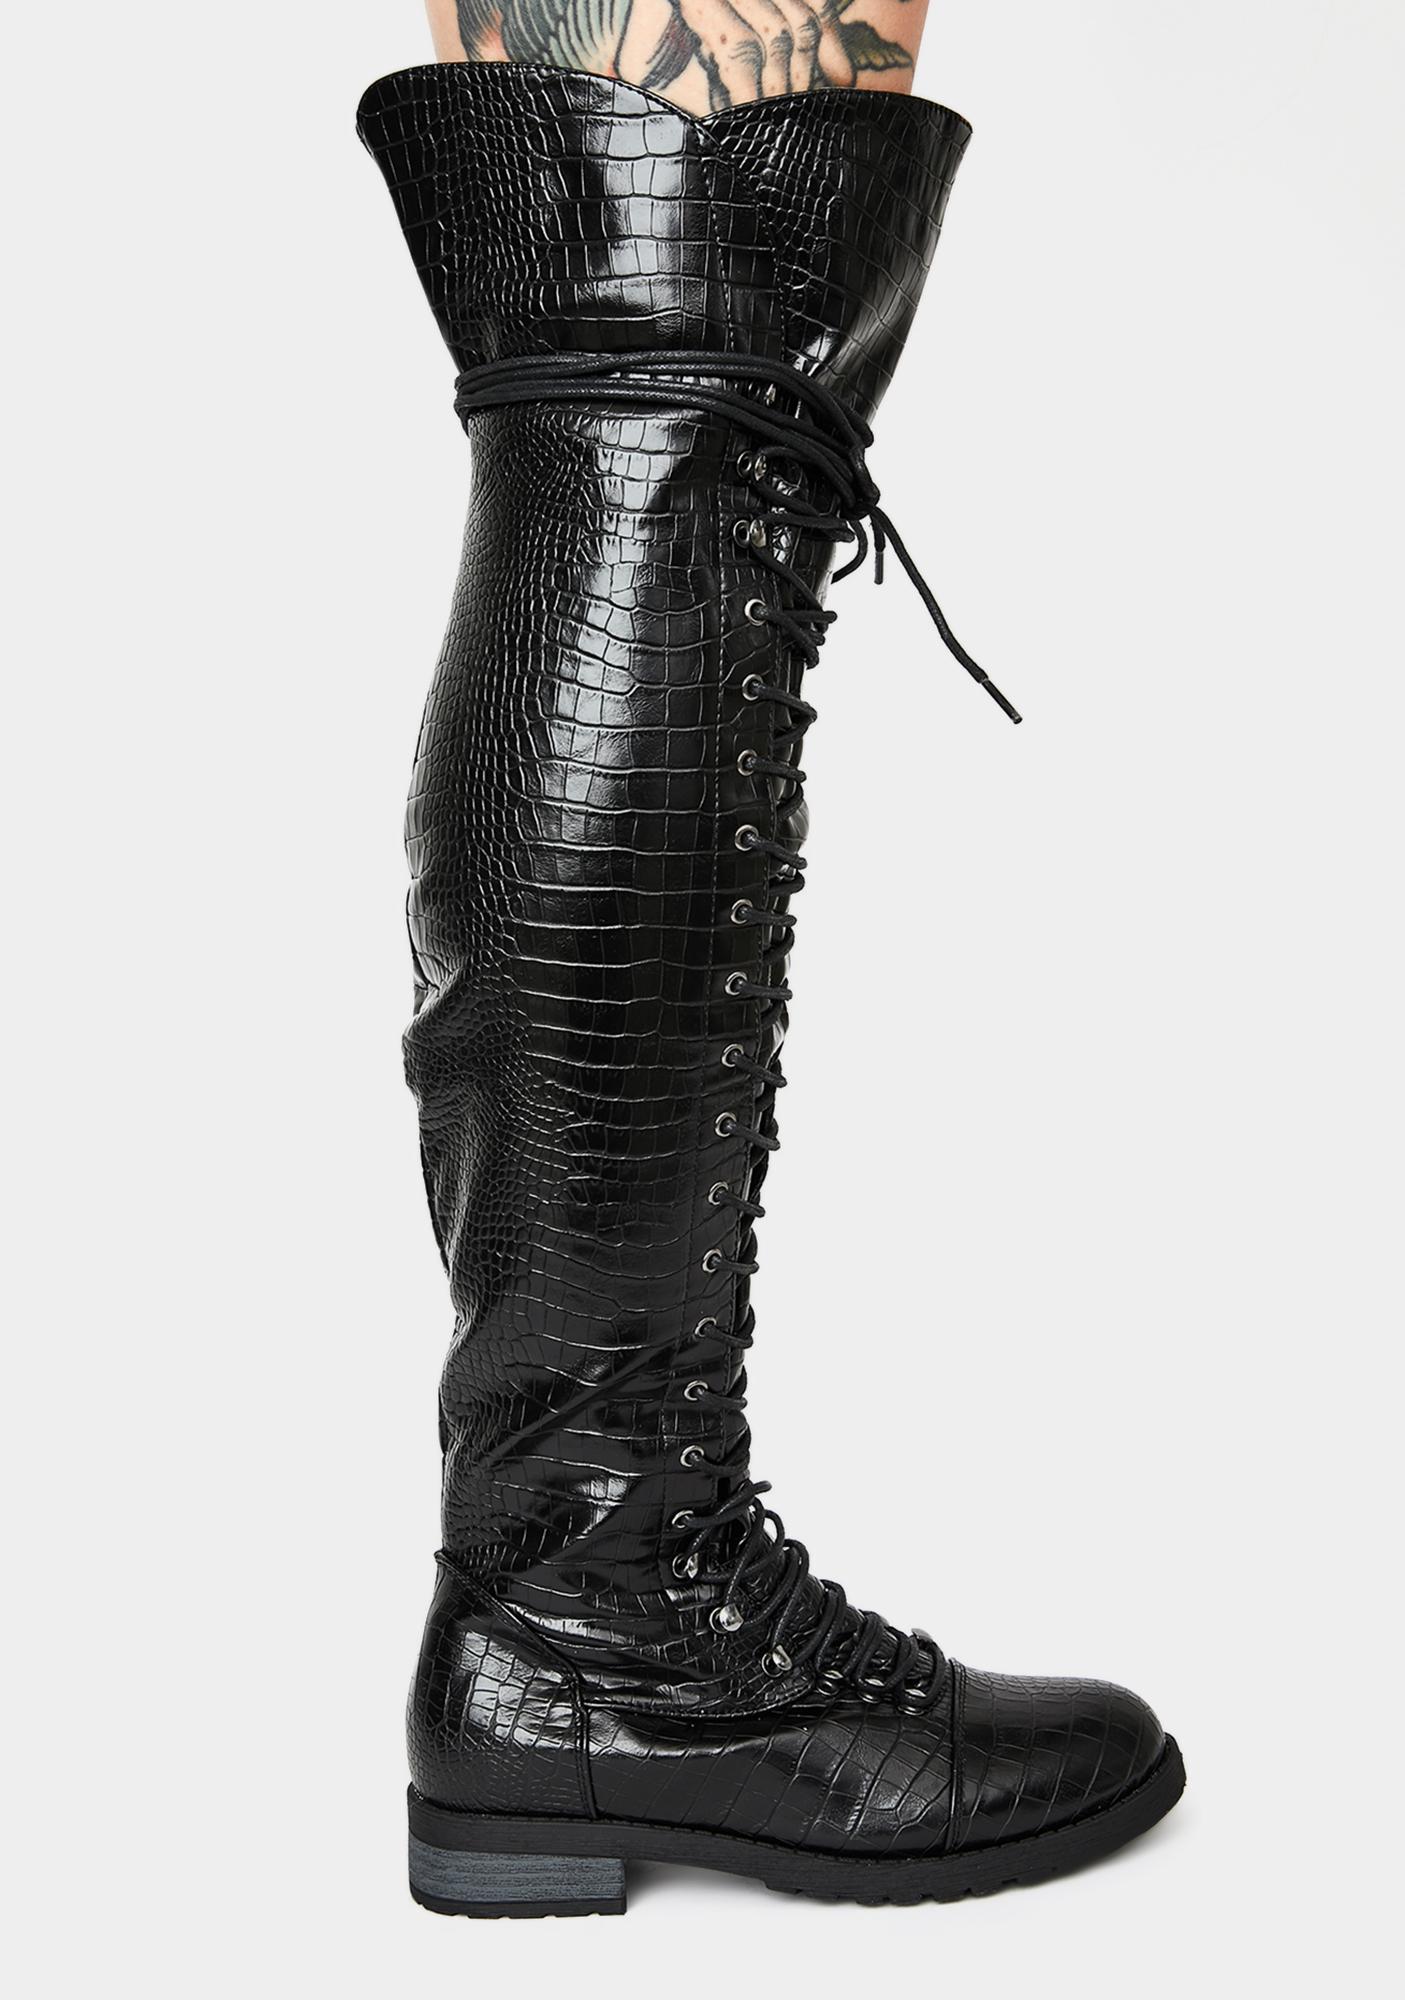 croc skin boots